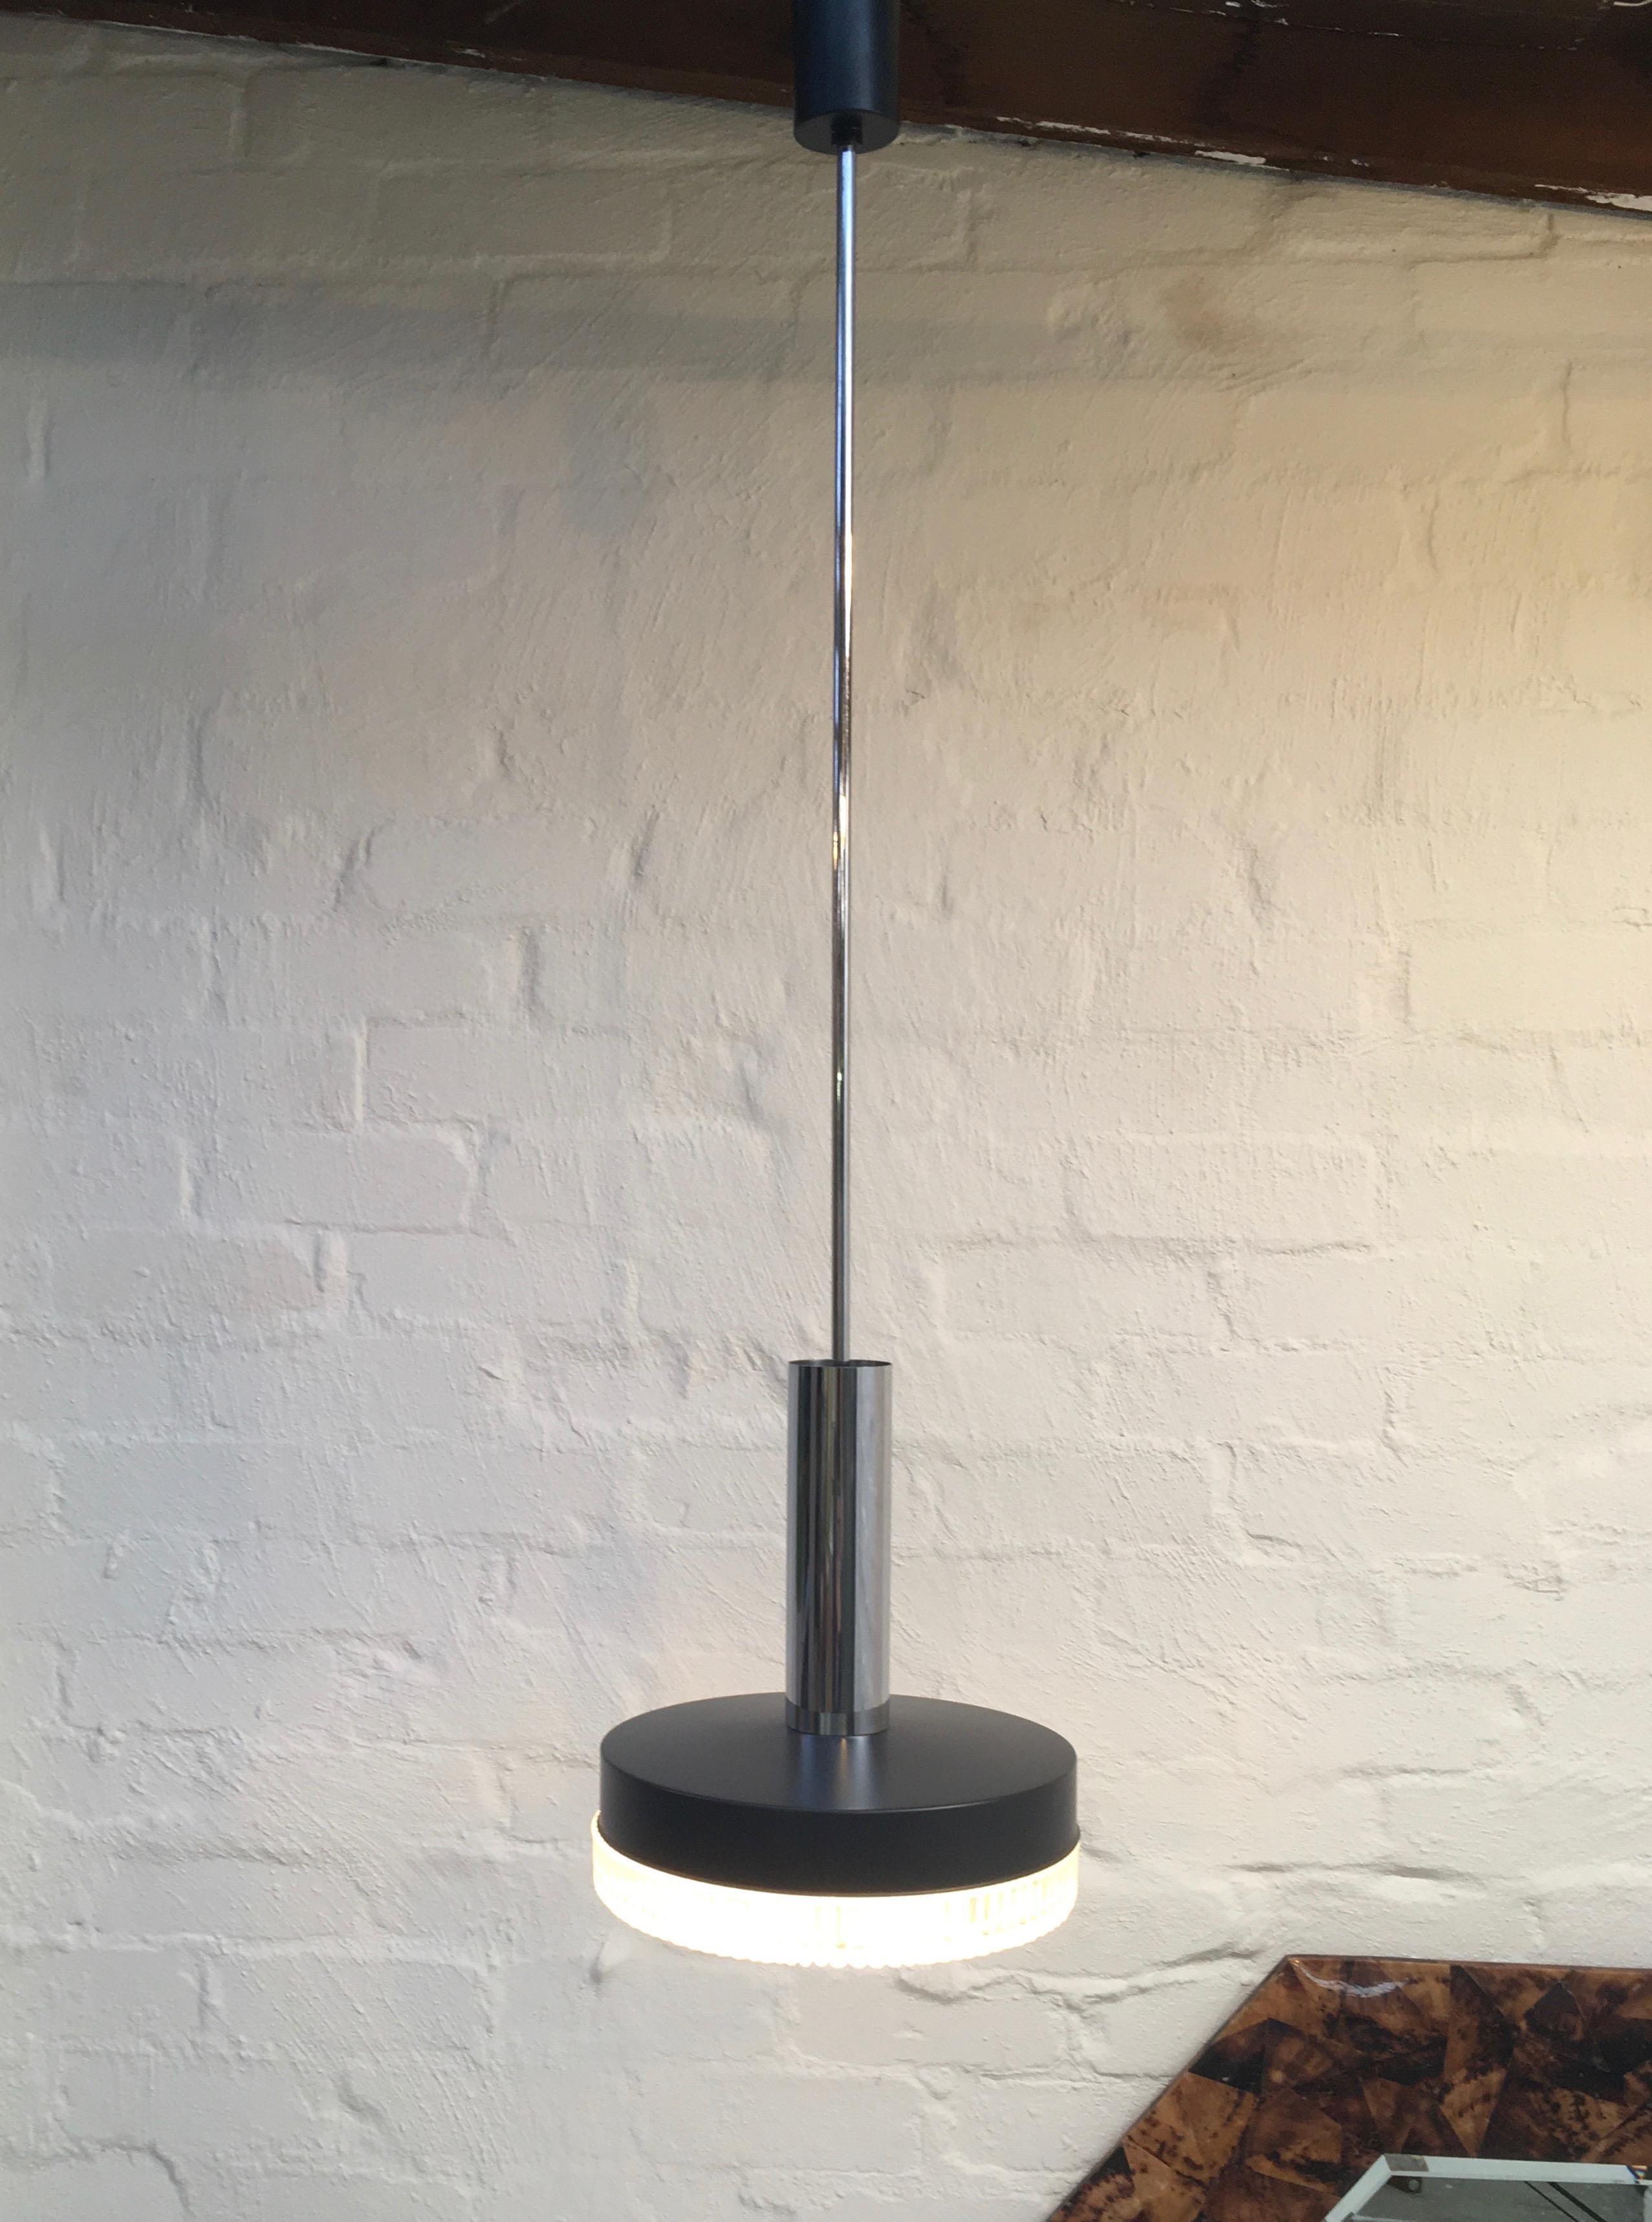 An elegant, long-stemmed pendant light in restrained modernist midcentury style. Several producers made lights like this: Stilnovo in Italy; Orrefors in Sweden; Lyfa in Denmark; RAAK in the Netherlands. 

We are plumbing for RAAK or Lyfa on this